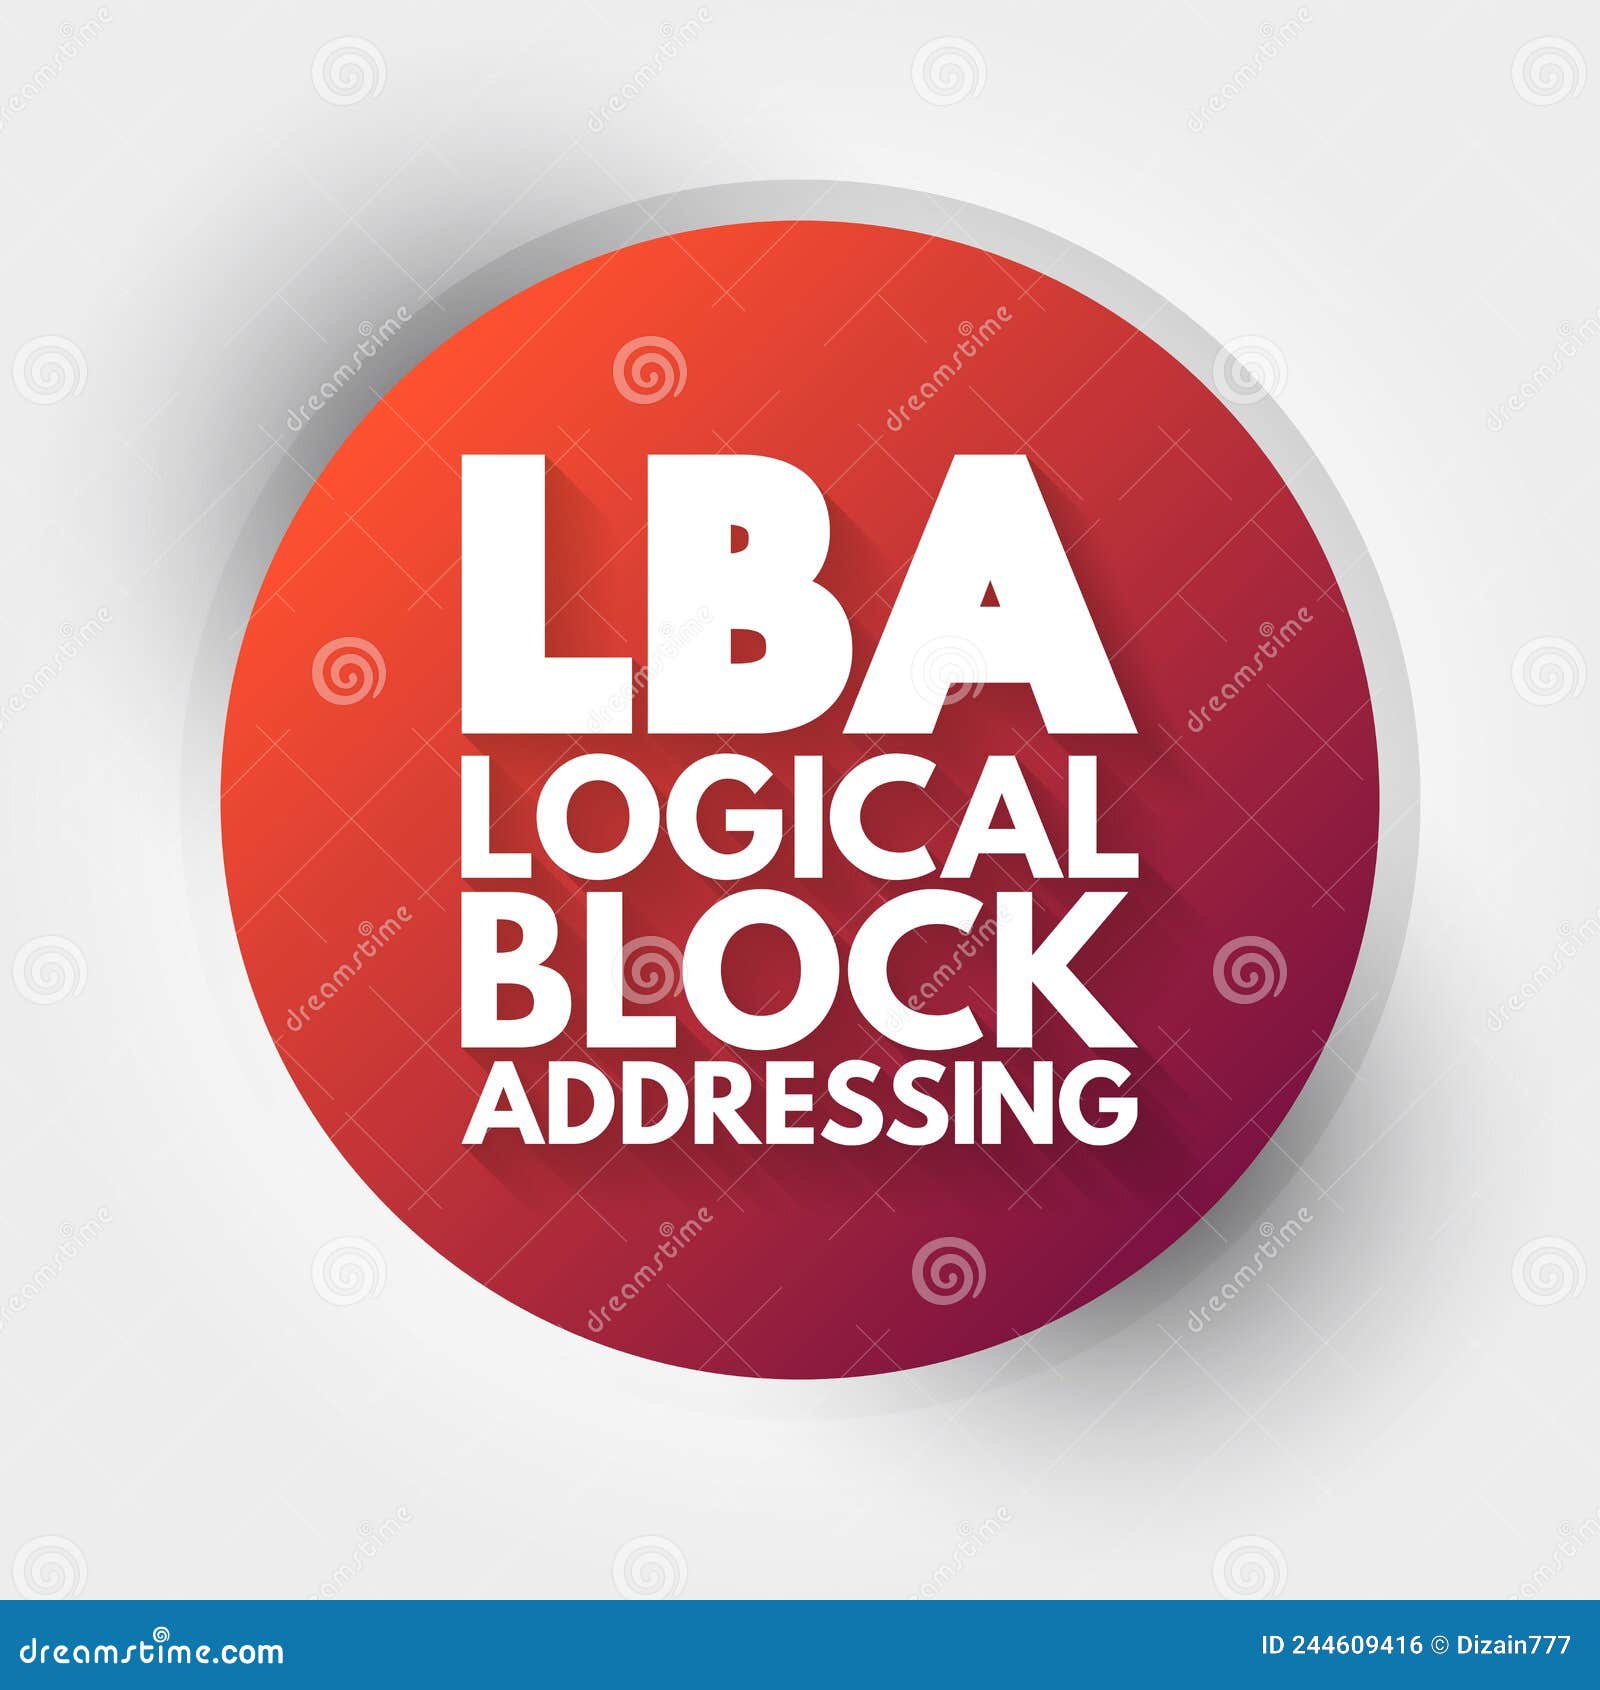 lba - logical block addressing acronym, technology concept background